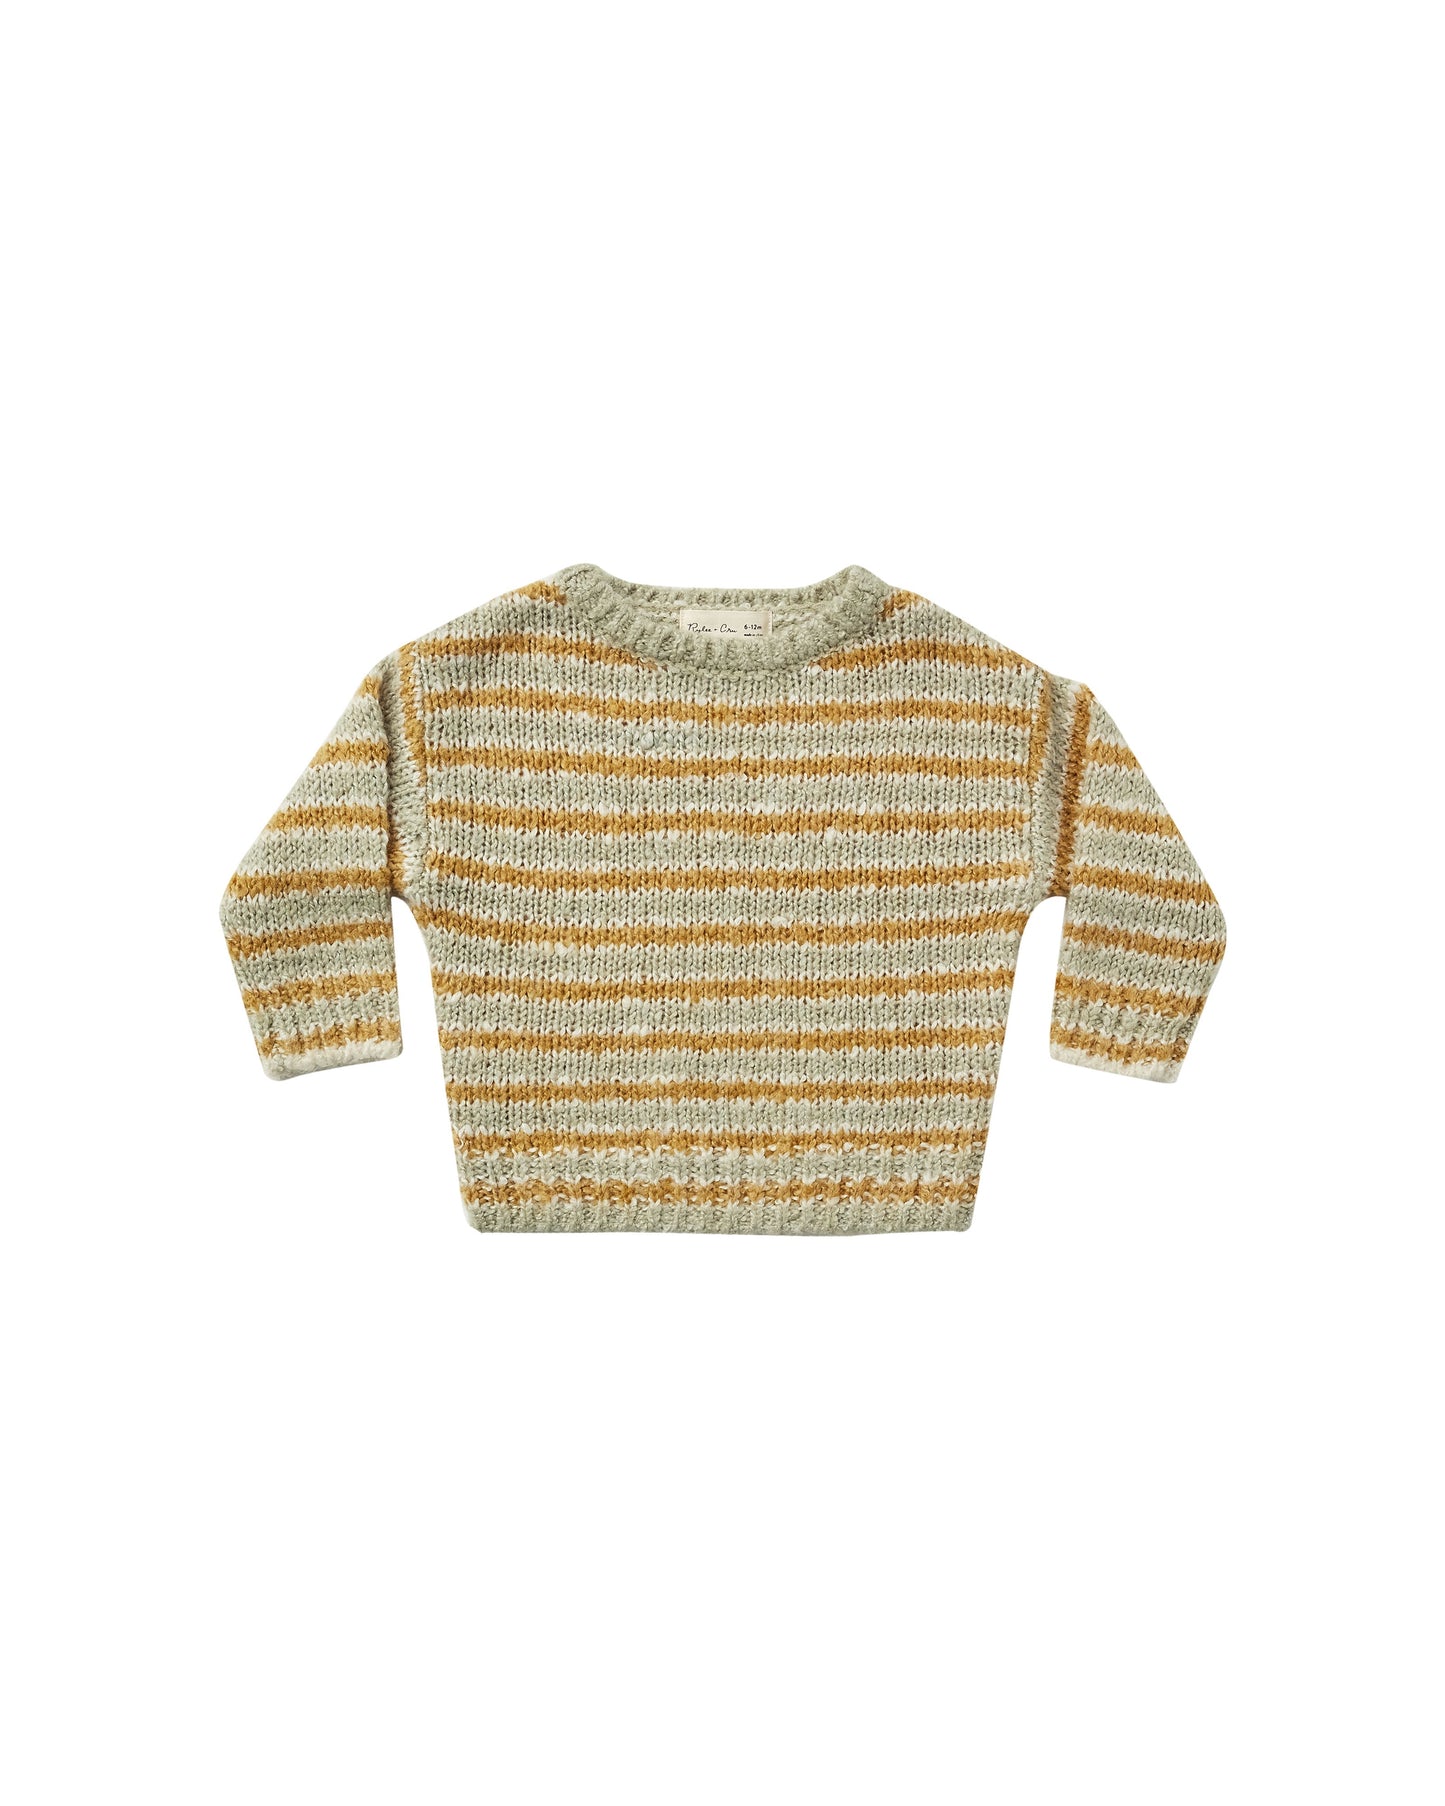 Aspen Sweater (Adult) - Agave / Gold stripe